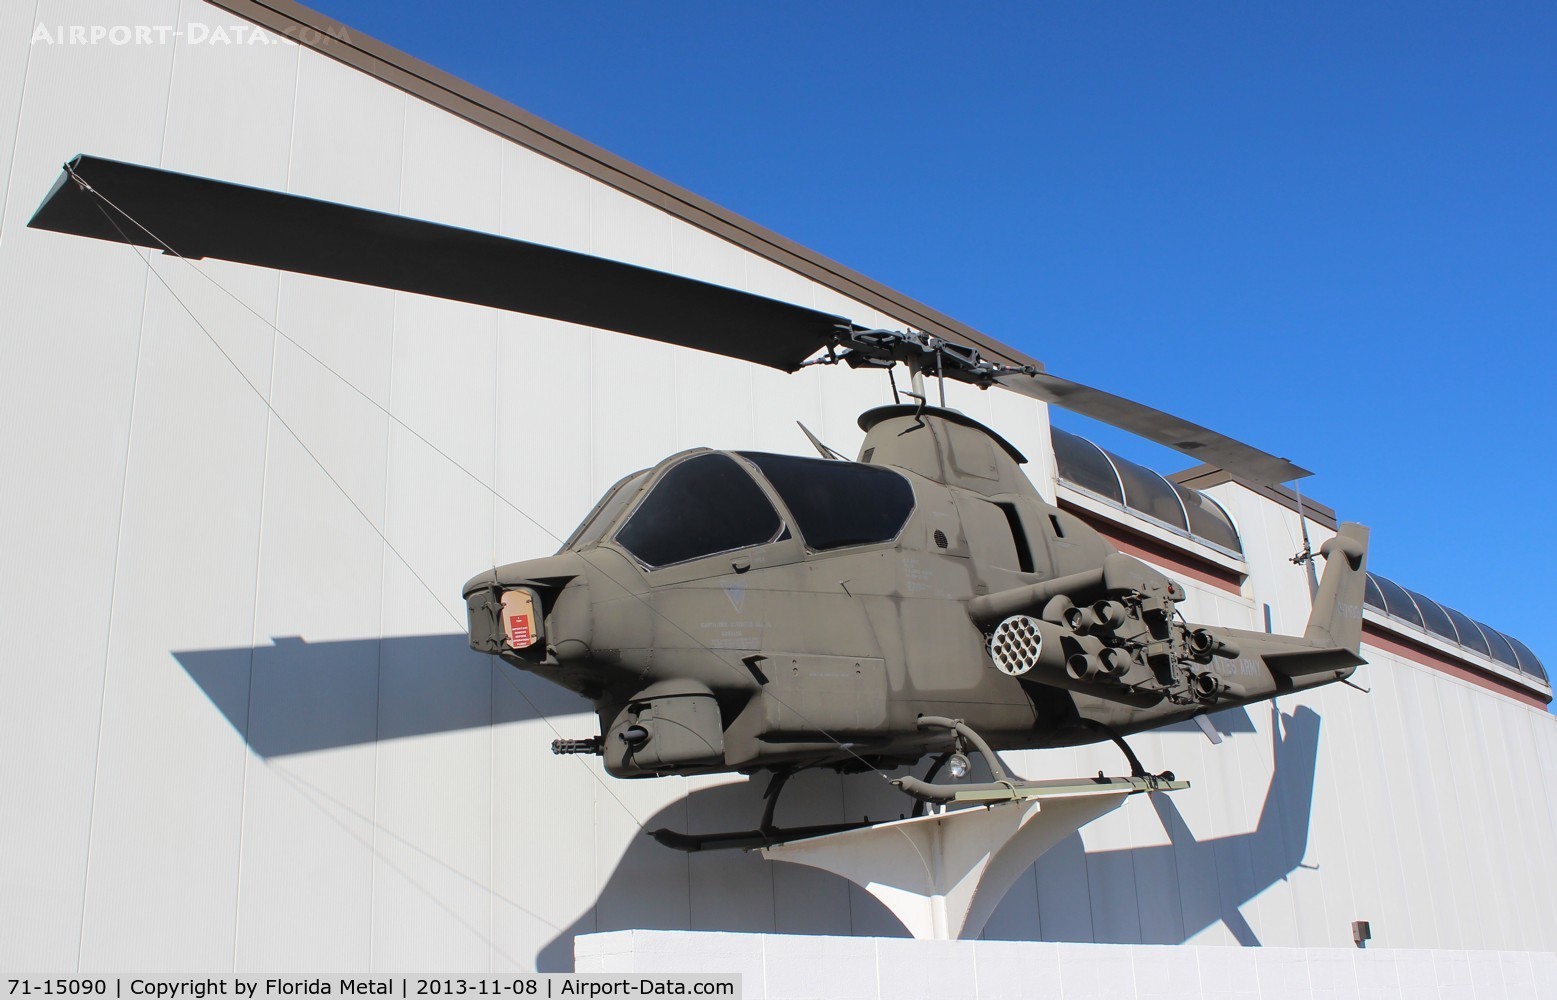 71-15090, 1971 Bell AH-1G Cobra C/N 21050, AH-1G Cobra at the Army Aviation Museum